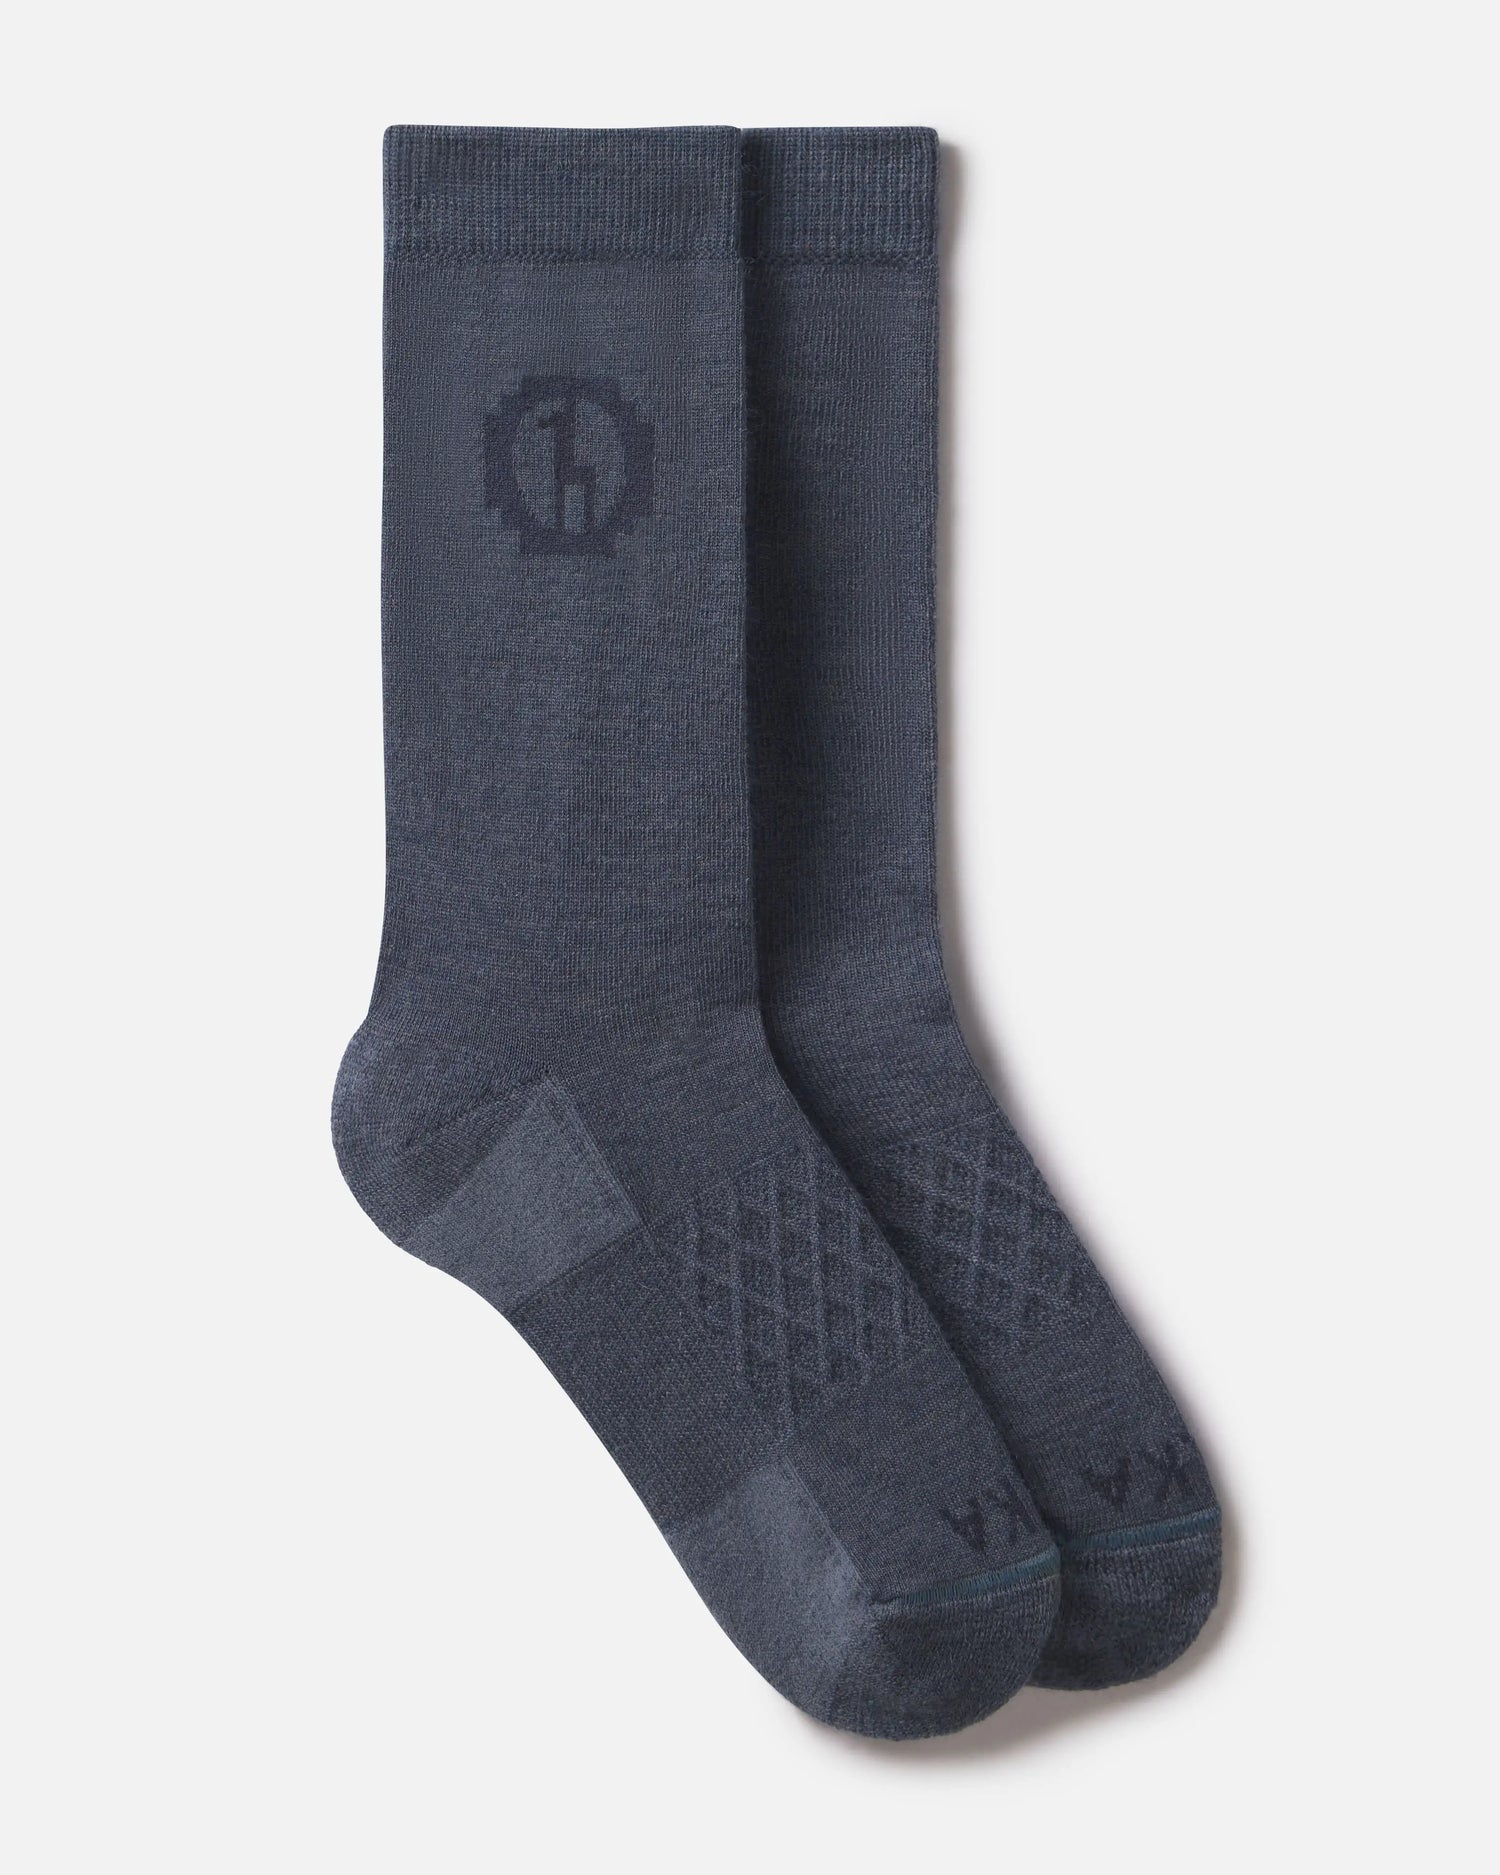 Alpaca Thermal Socks - Made in Quebec - Boutique art Inca